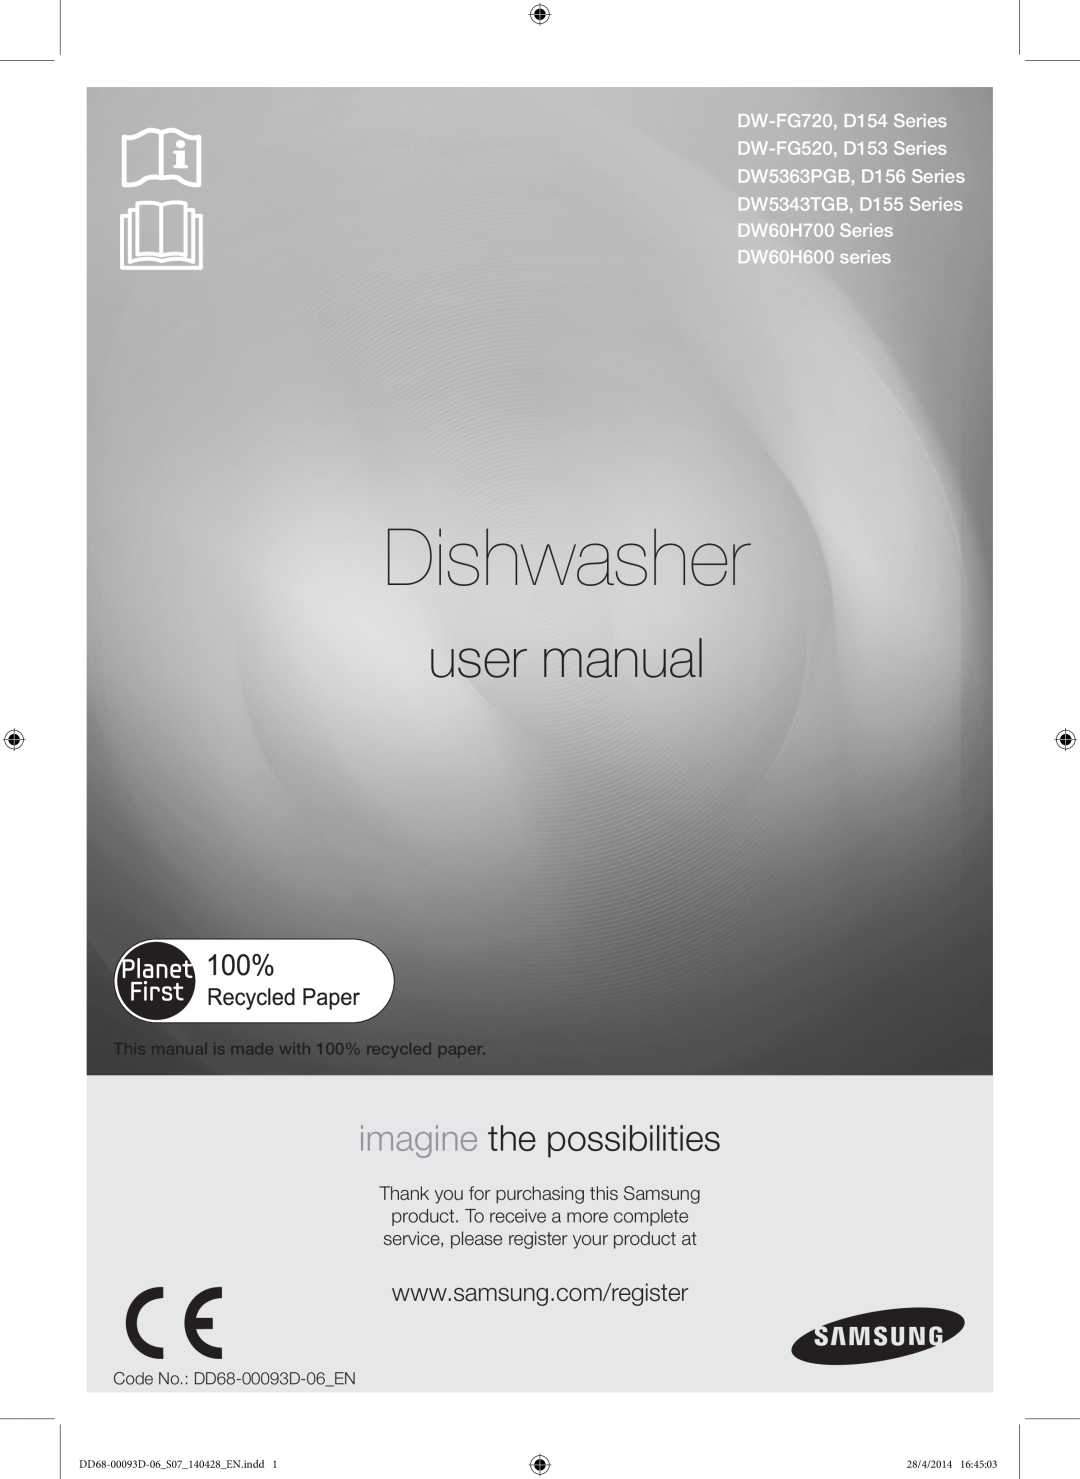 Samsung DW-FG520S/XTR manual Dishwasher, user manual, imagine the possibilities, DD68-00093D-06S07140428EN.indd, 28/4/2014 